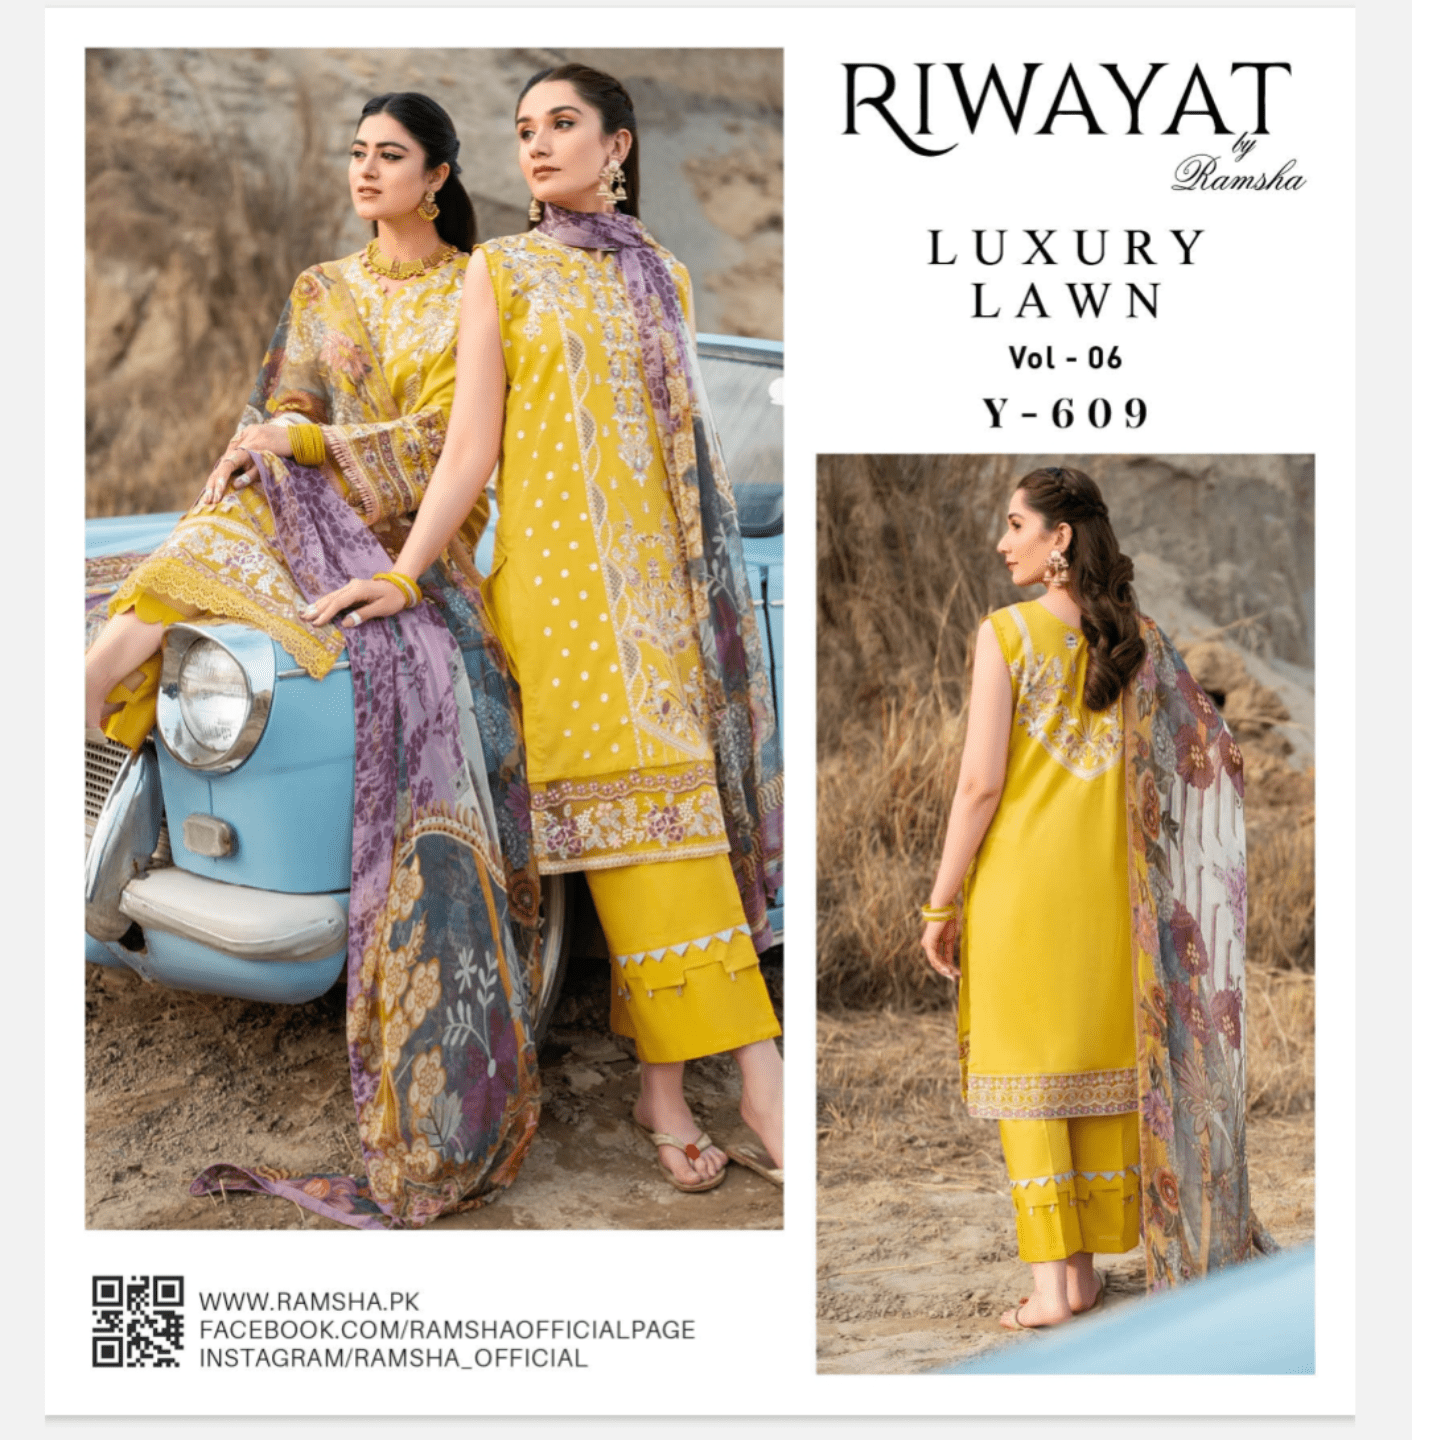 Riwayat luxury Lawn Vol 06 23